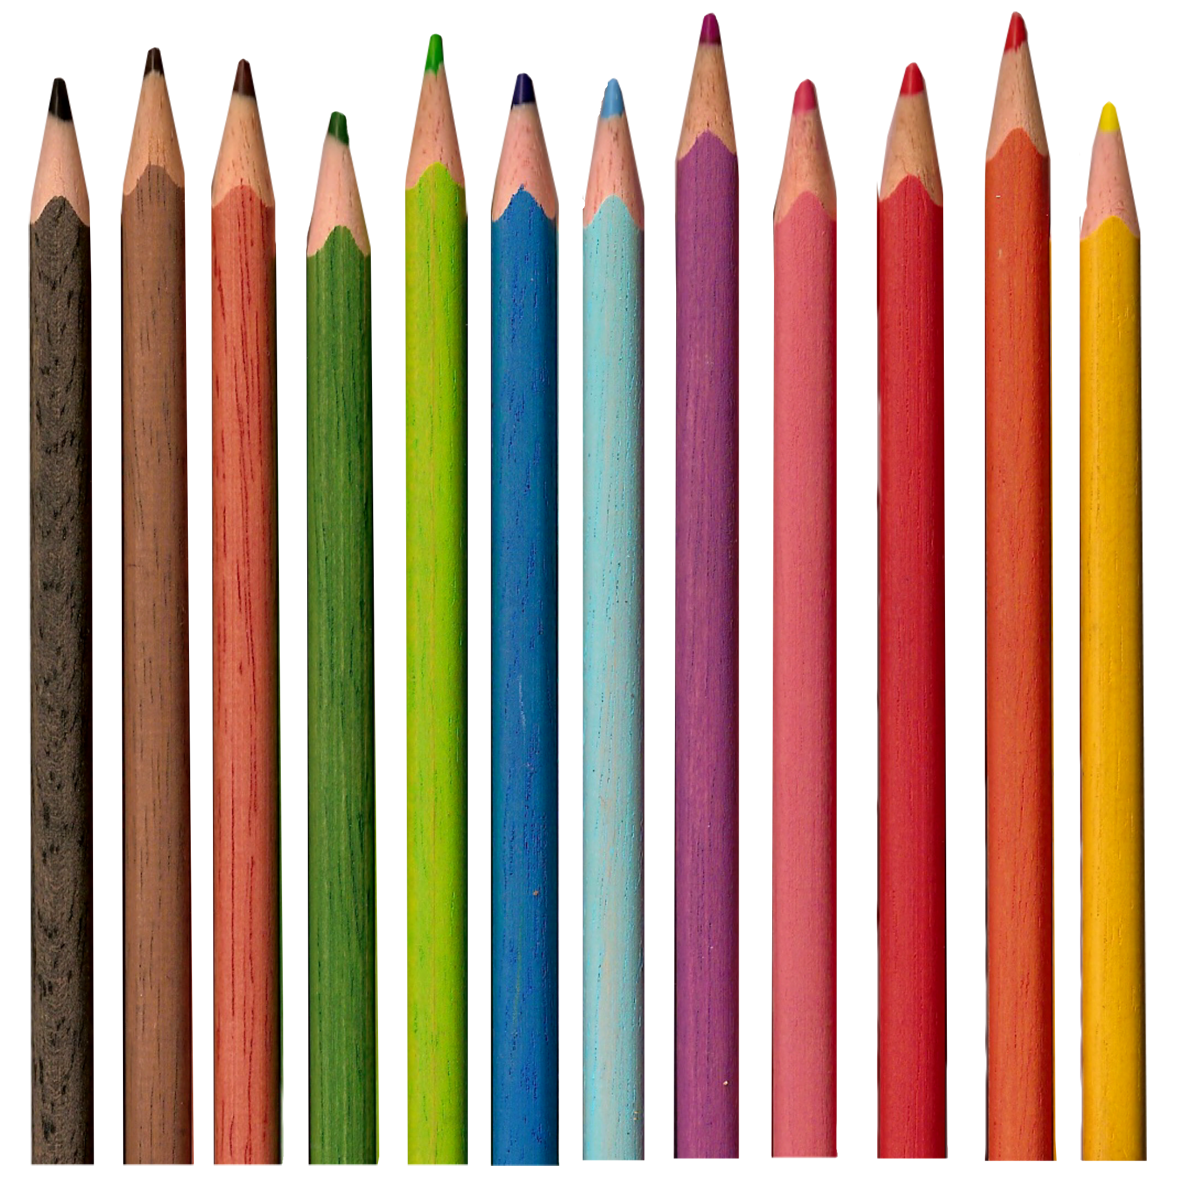 Lead Pencils Royalty Free Stock Photo - Image: 9566095